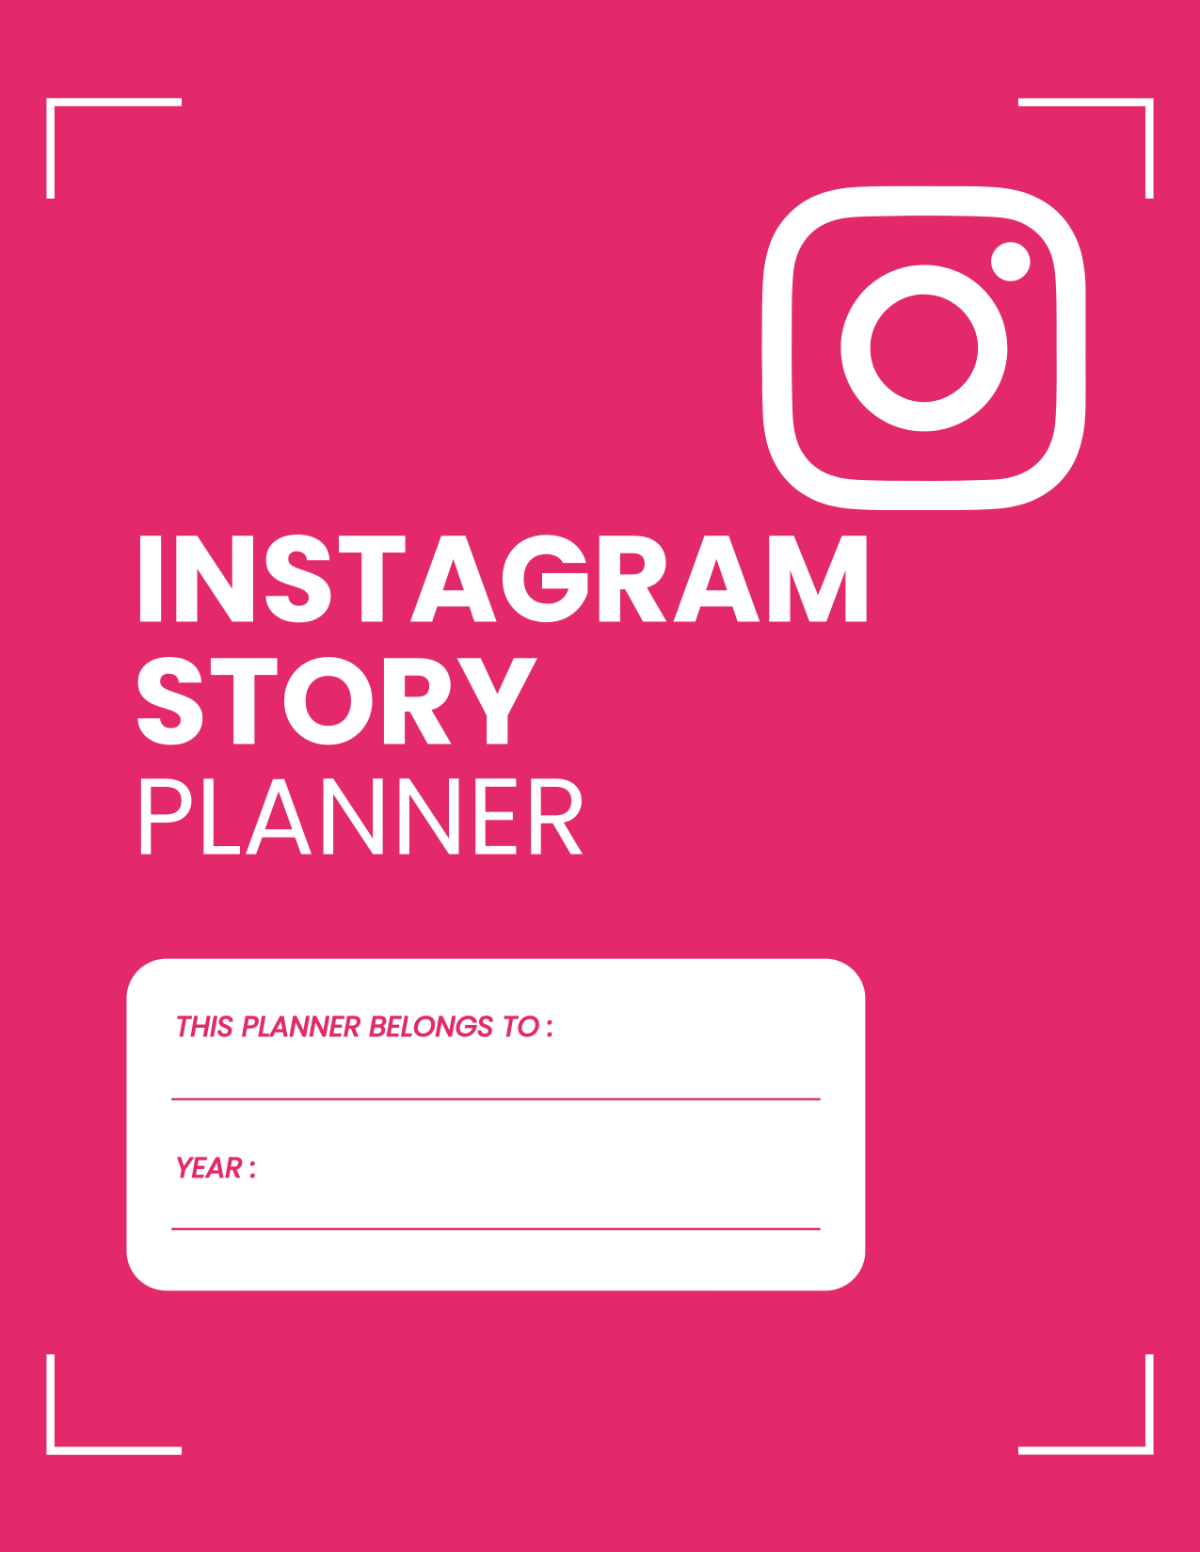 Instagram Story Planner Template